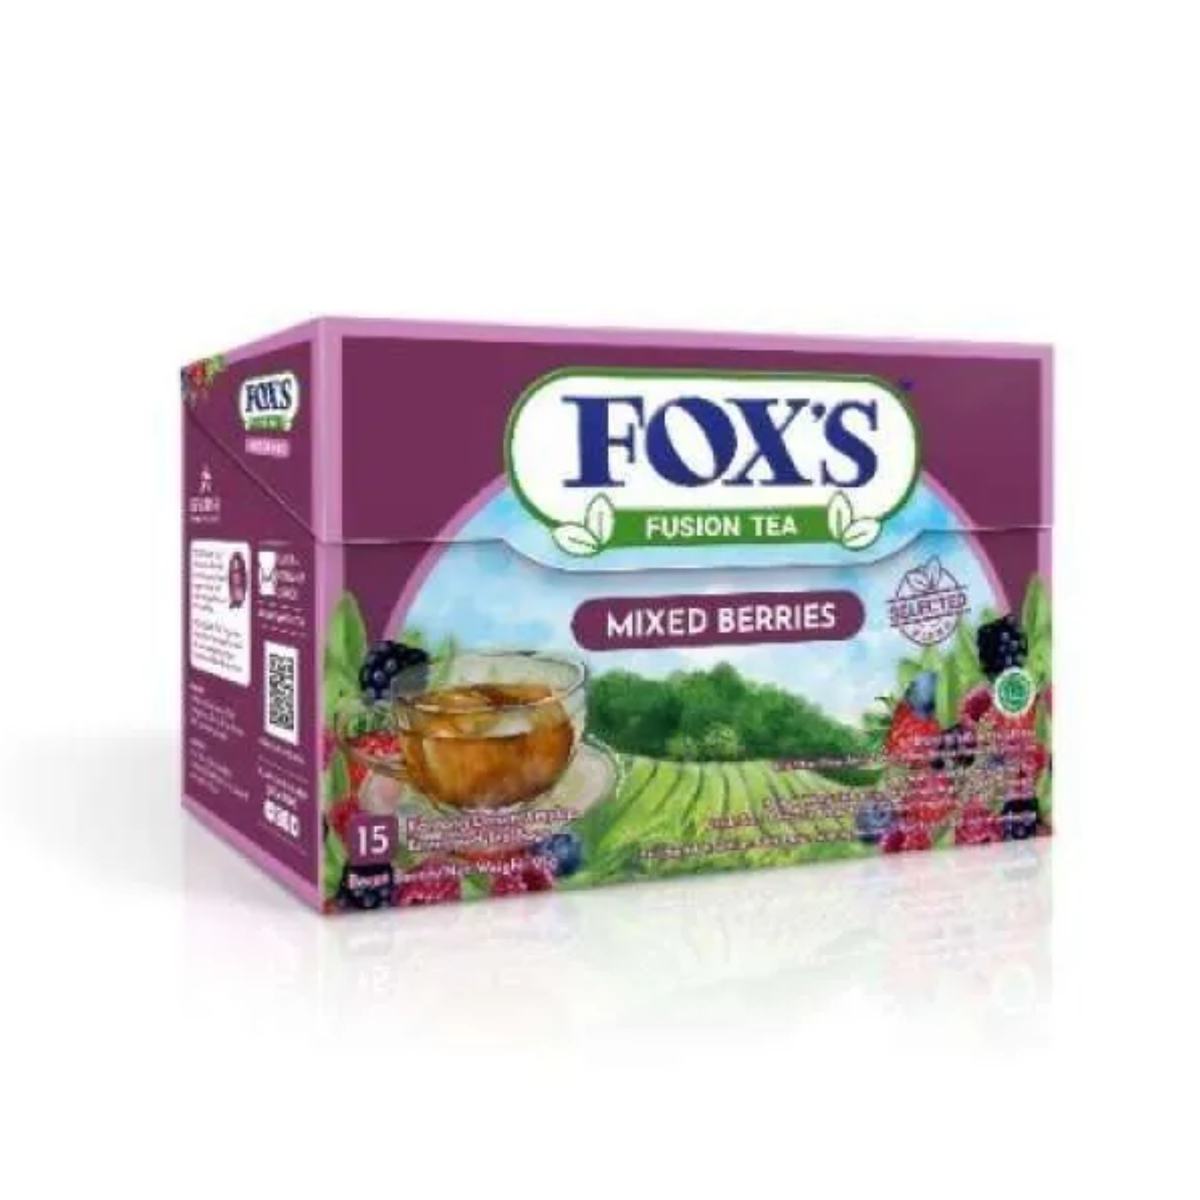 Fox's Fusion Tea Mixed Berries 25g